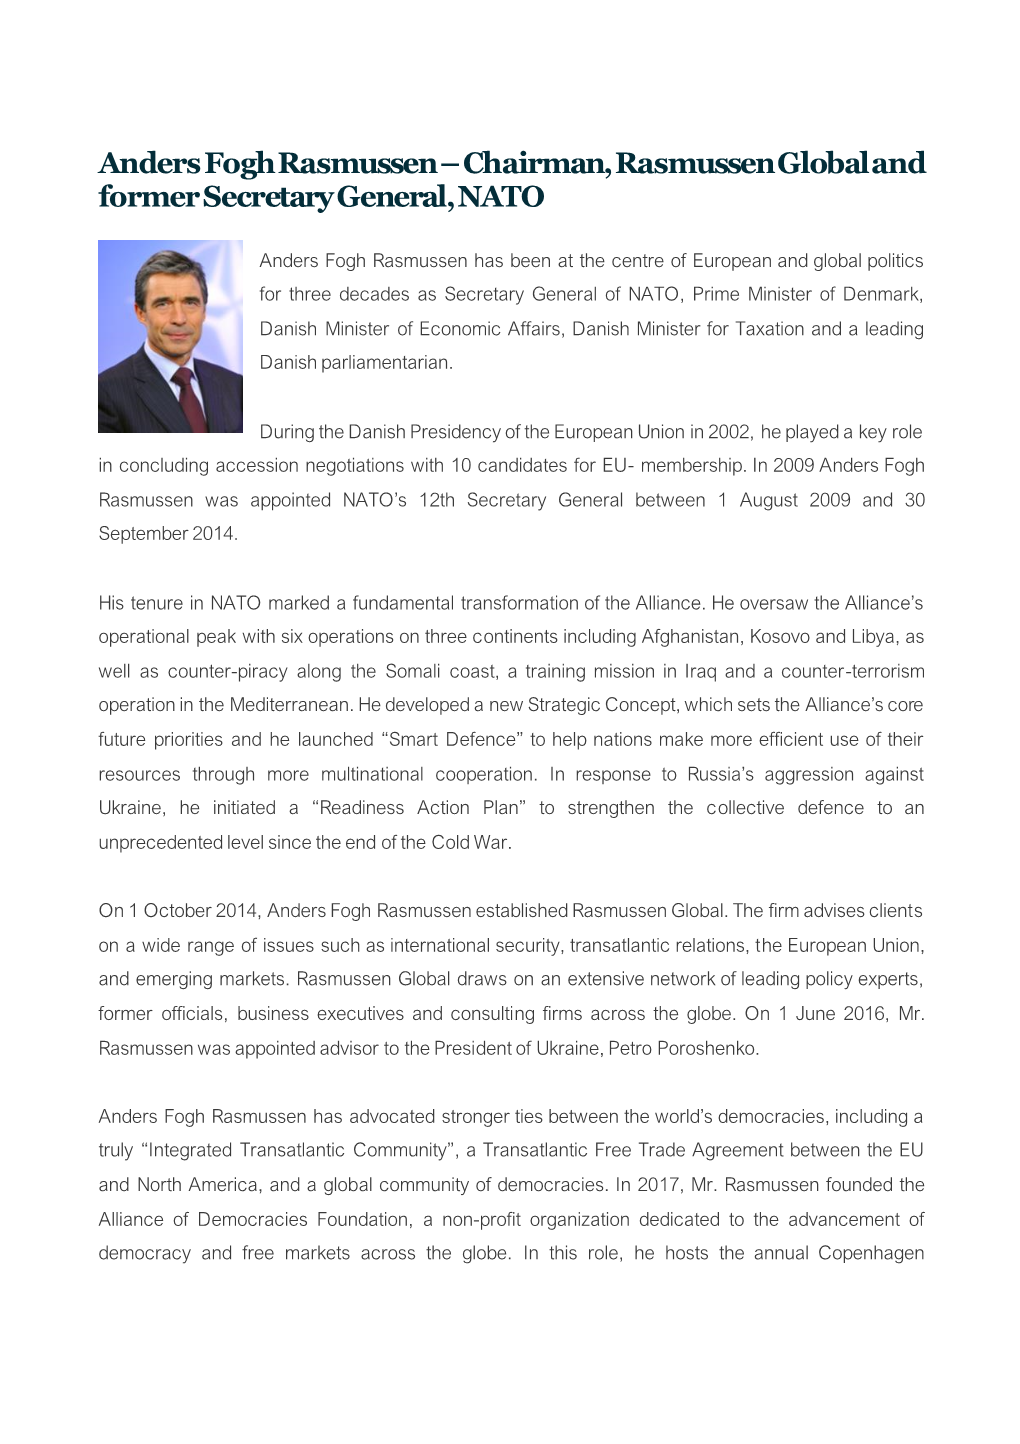 Anders Fogh Rasmussen – Chairman, Rasmussen Global and Former Secretary General, NATO